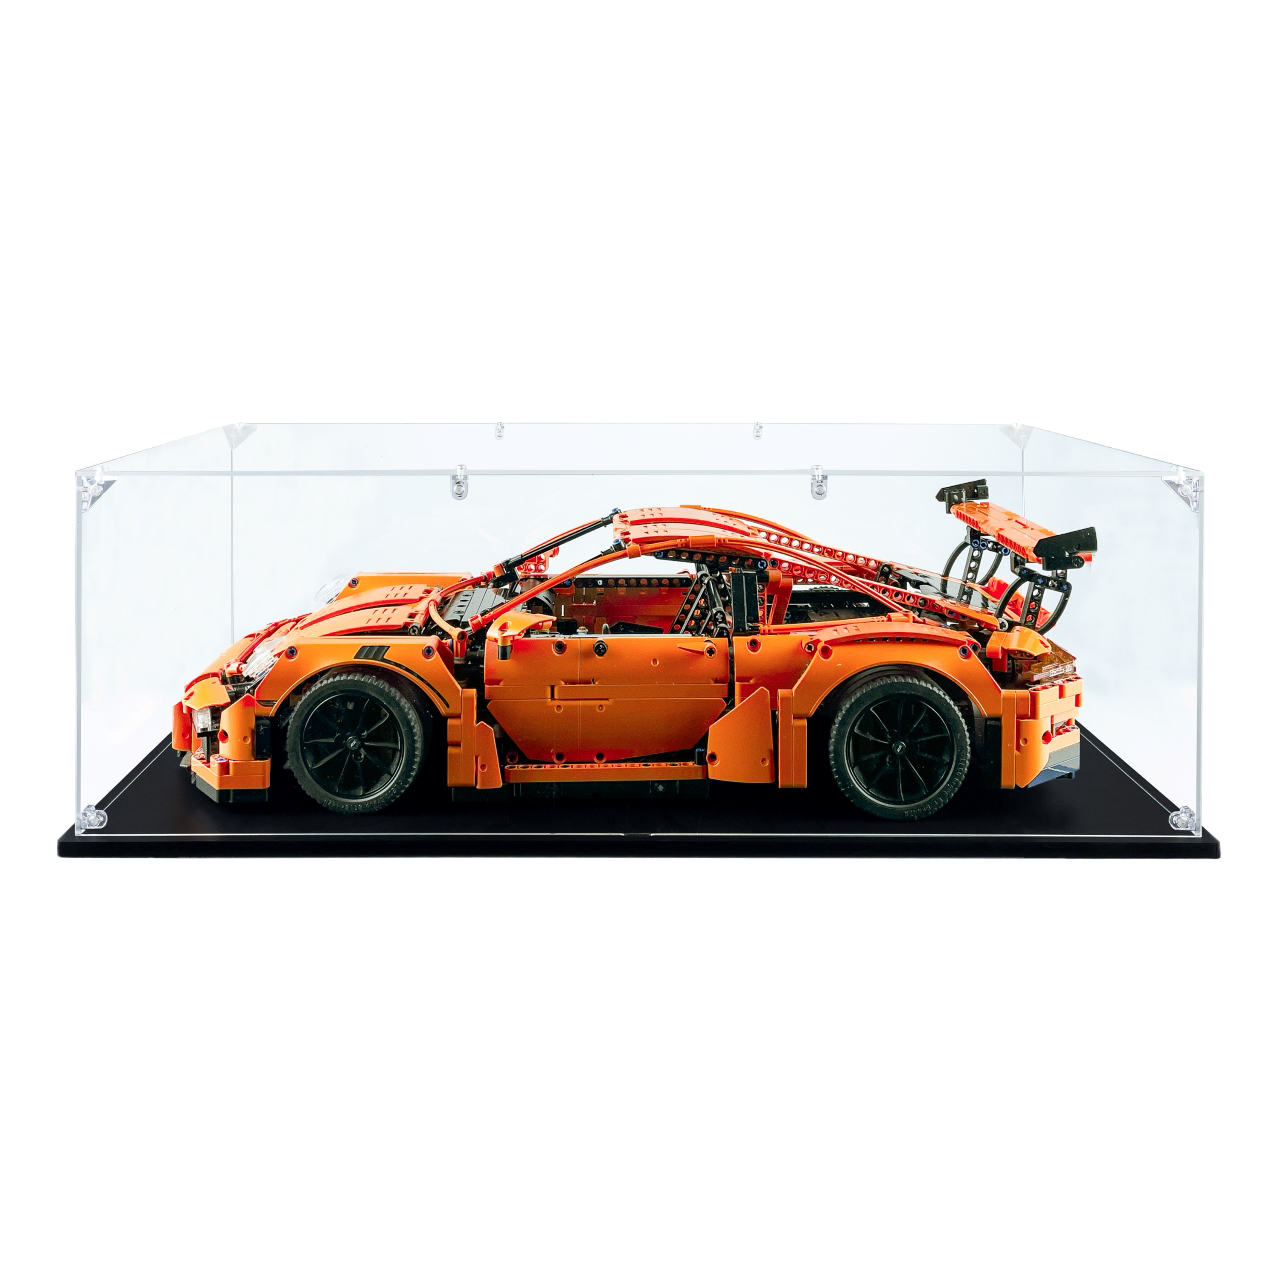 LEGO® Technic - Porsche 911 GT3 RS - 42056